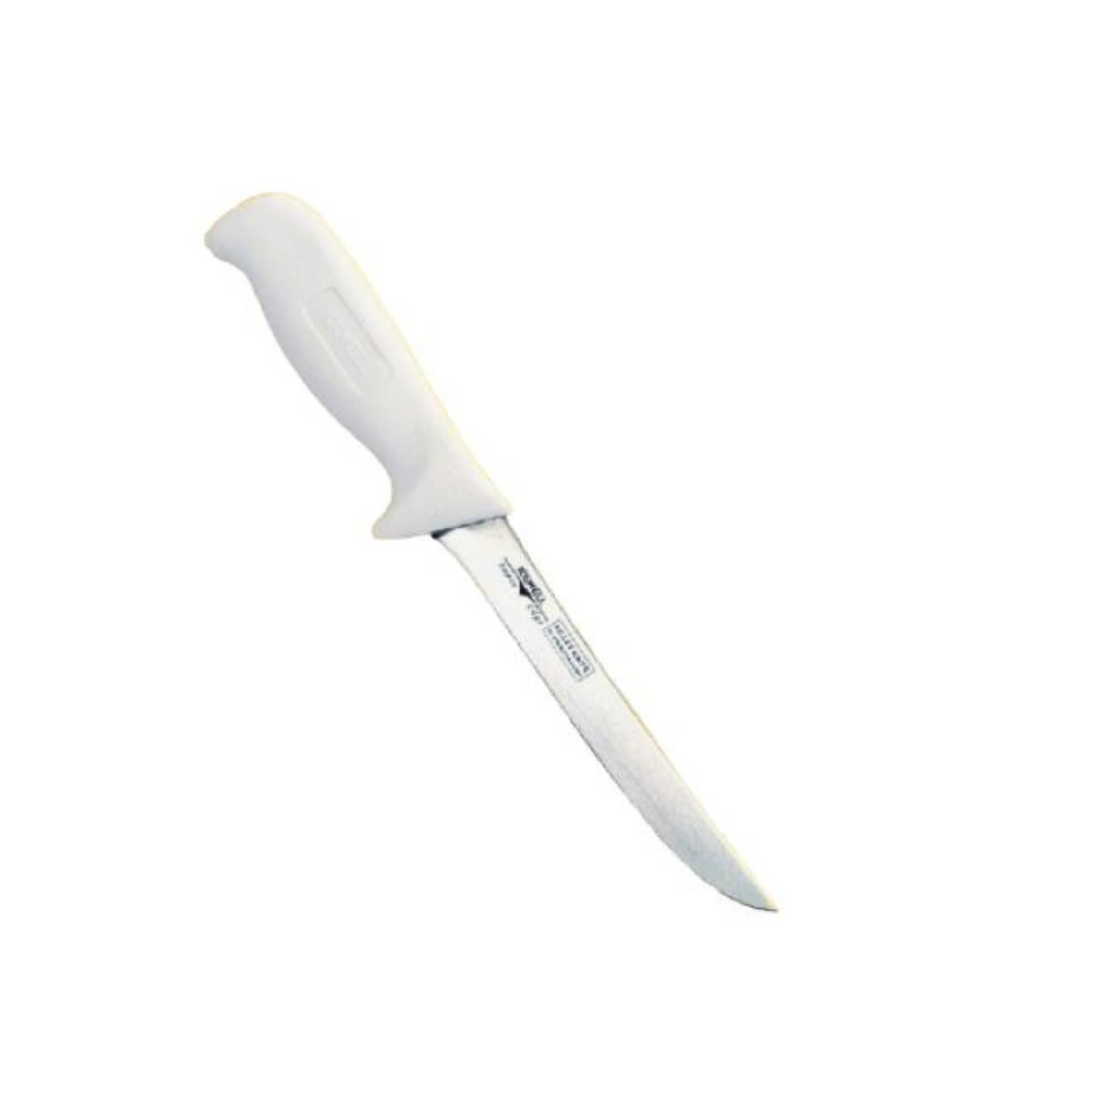 KNIFE WHITELUX BAIT WIDE 160MM BLADE